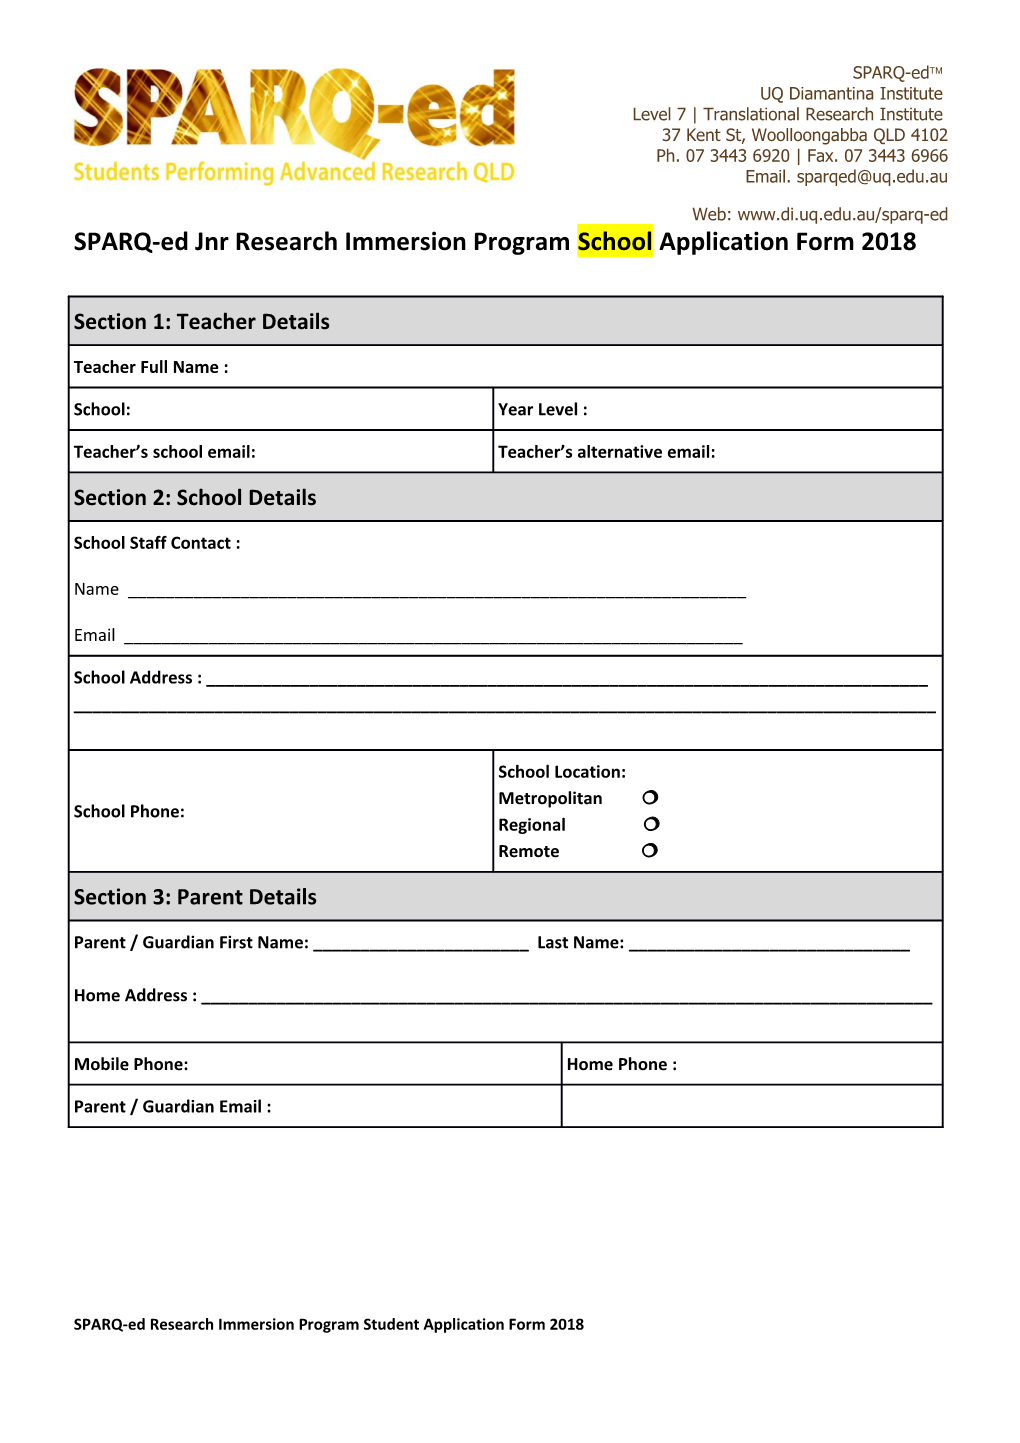 SPARQ-Ed Jnr Research Immersion Program Schoolapplication Form2018